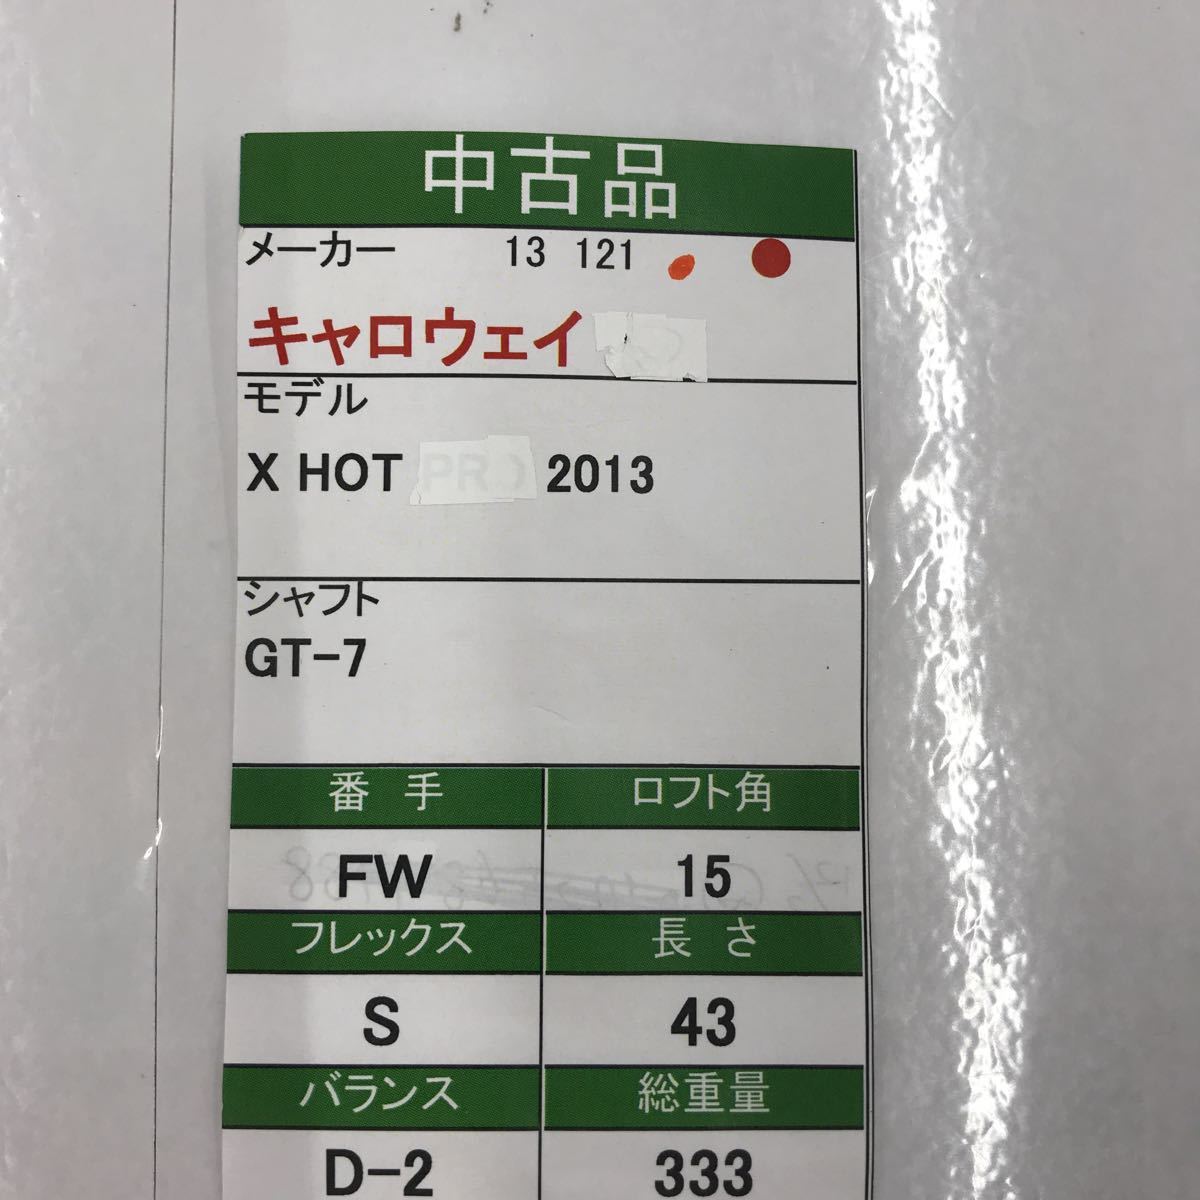 FW キャロウェイ X HOT 2013 15度 flex:S TourAD GT-7 メンズ右 即決